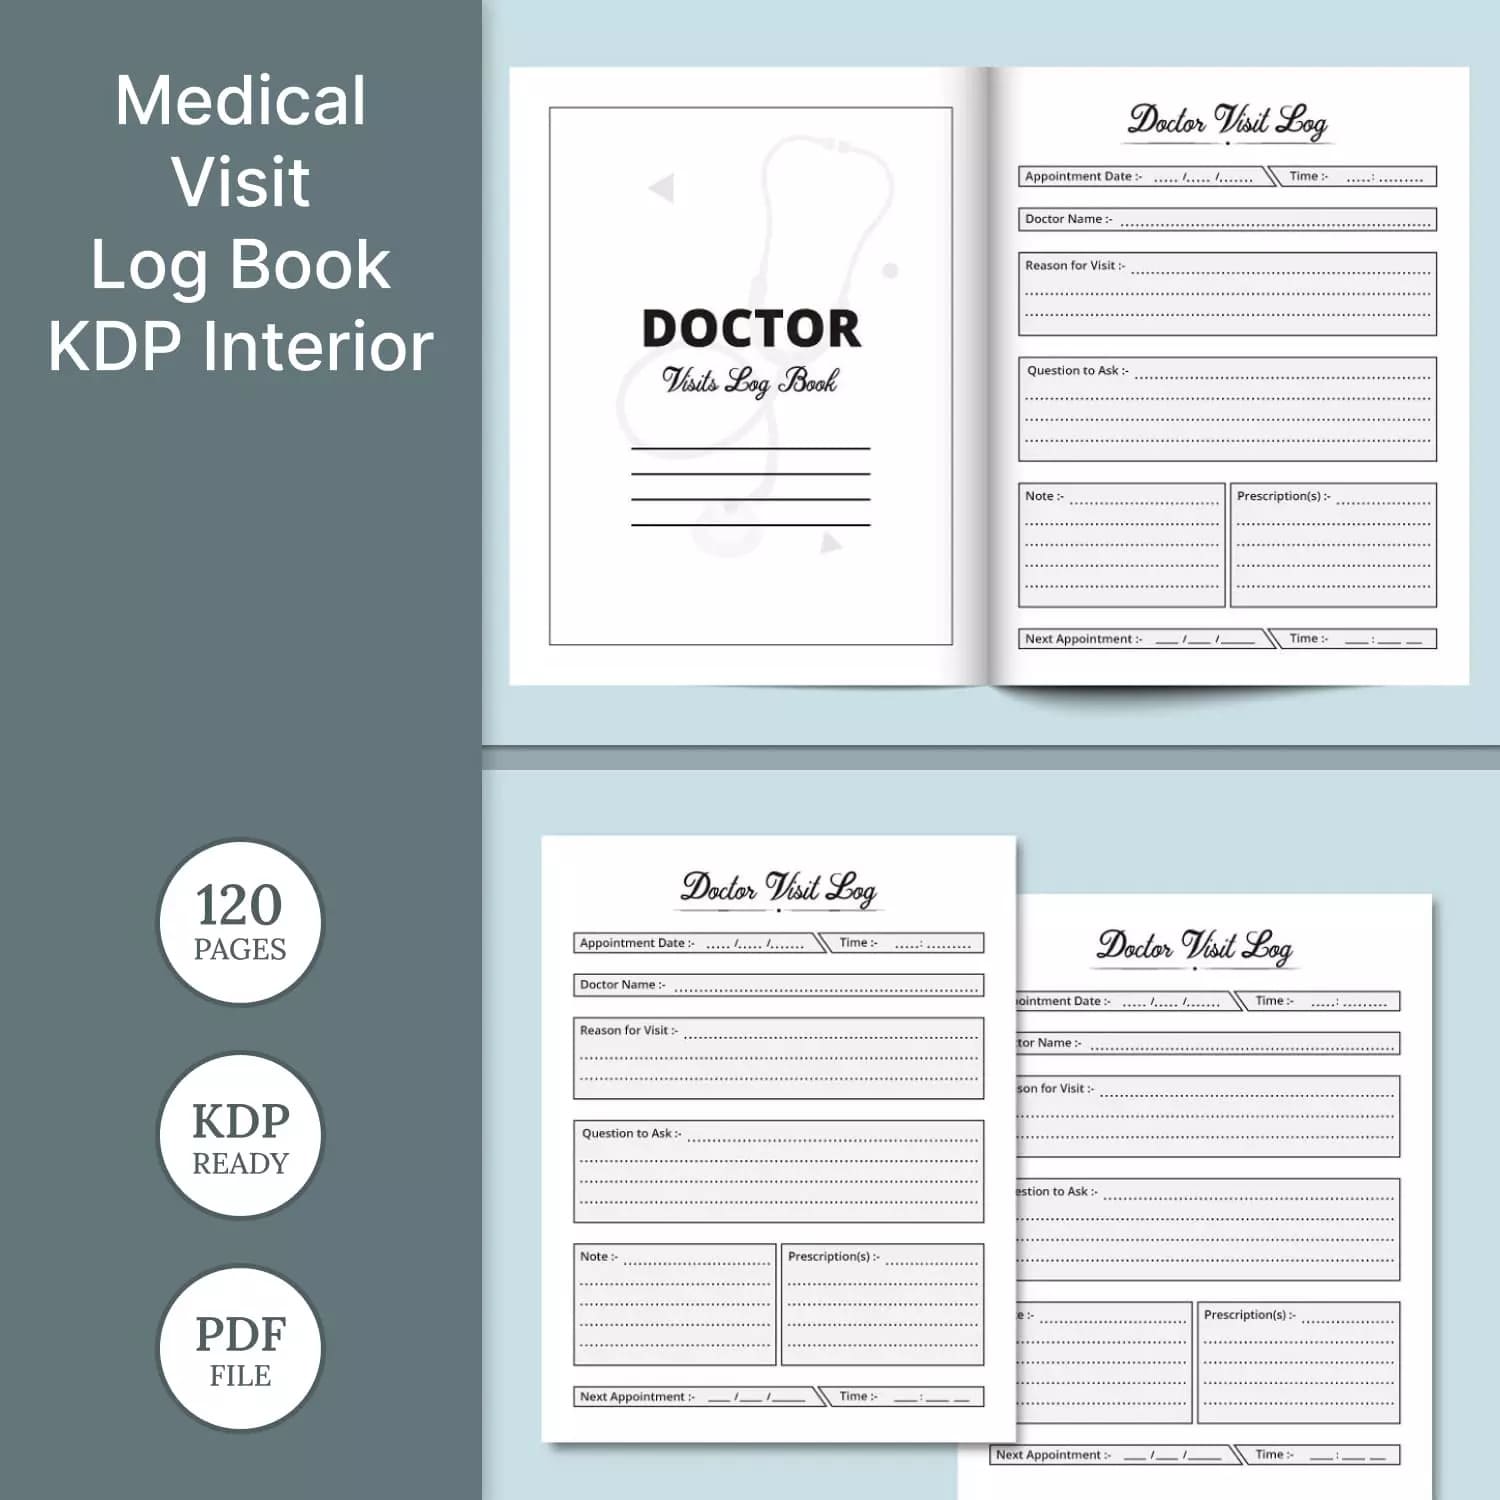 Medical Visit Log Book Kdp Interior Preview image.